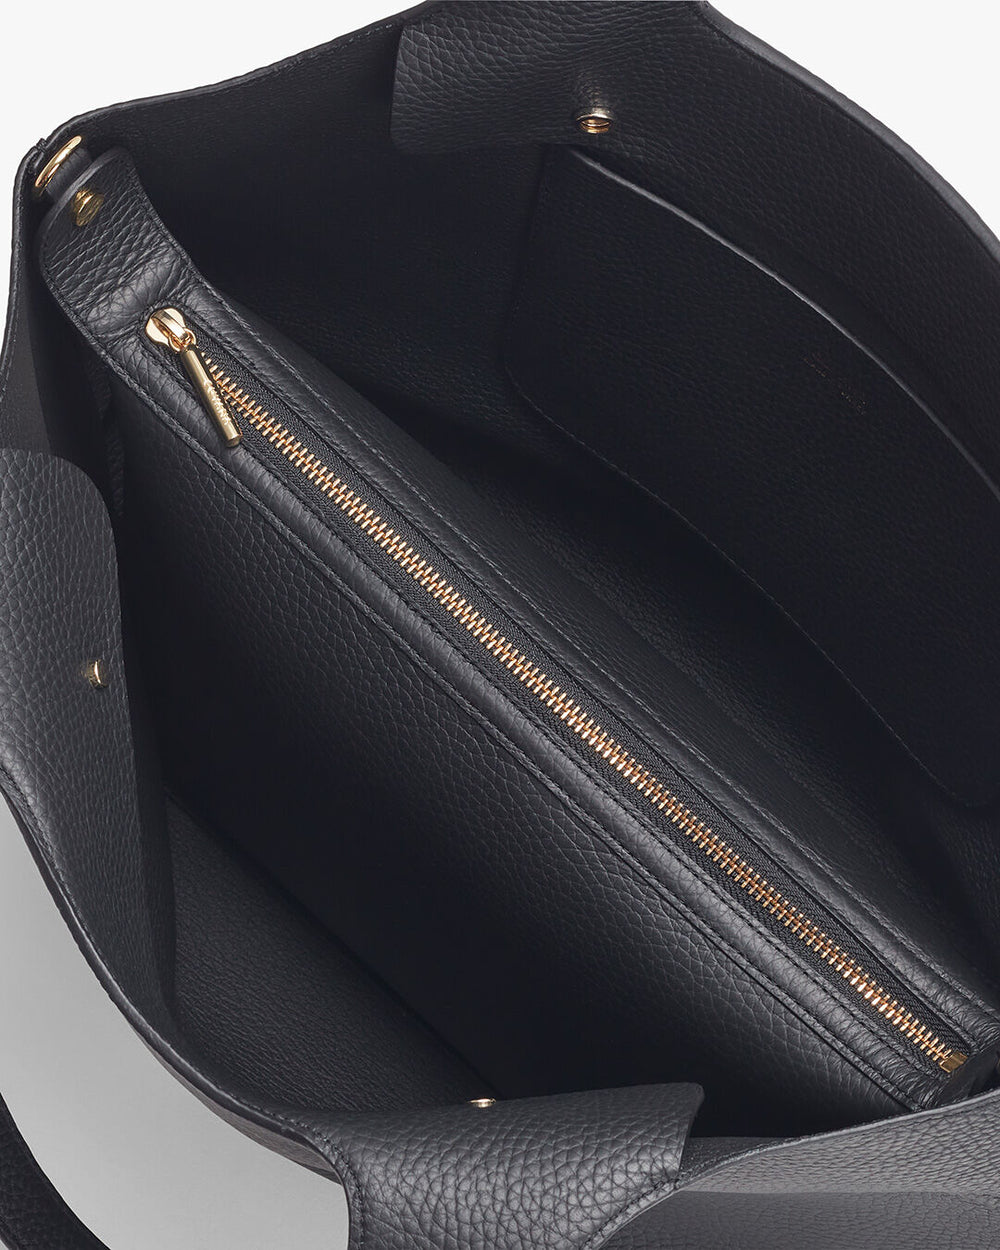 Open handbag showing inner compartment and zipper.